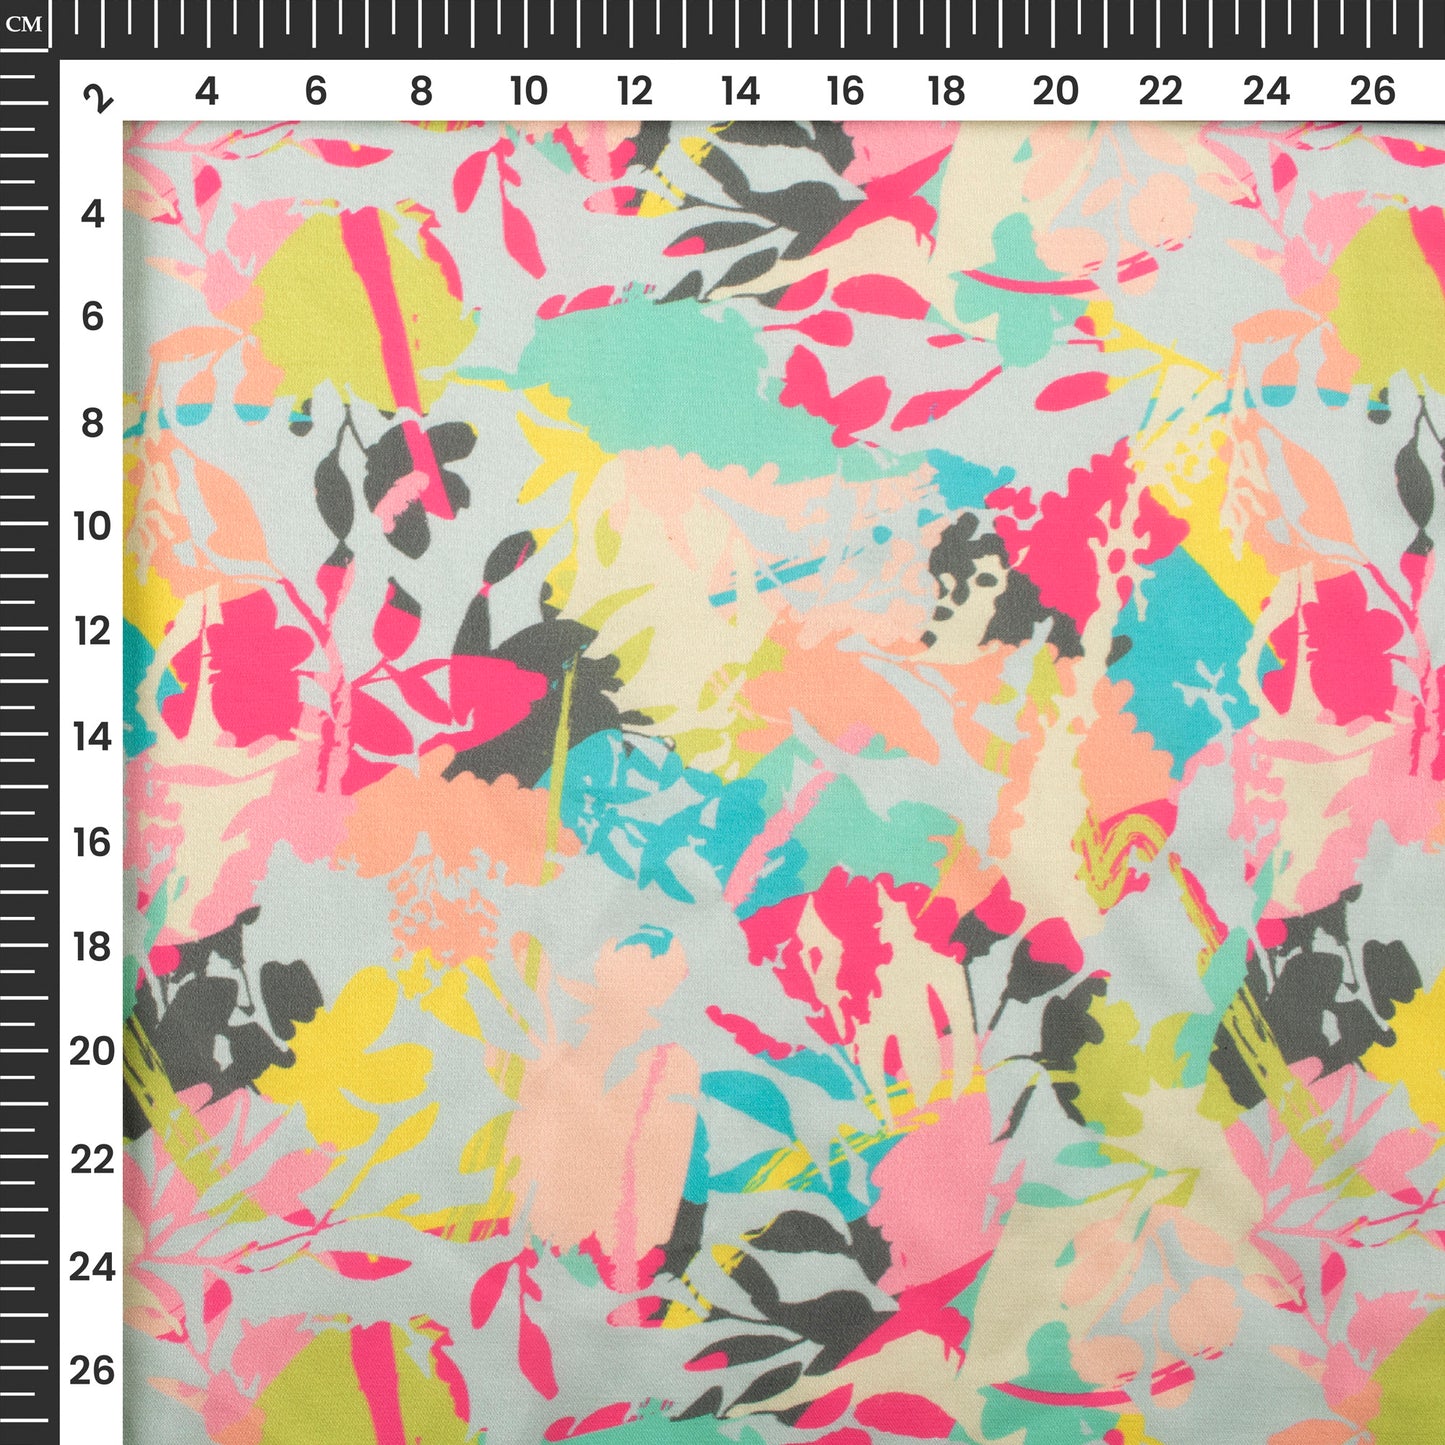 Spectrum Blossoms: Colorful Digital Print Modal Satin Fabric